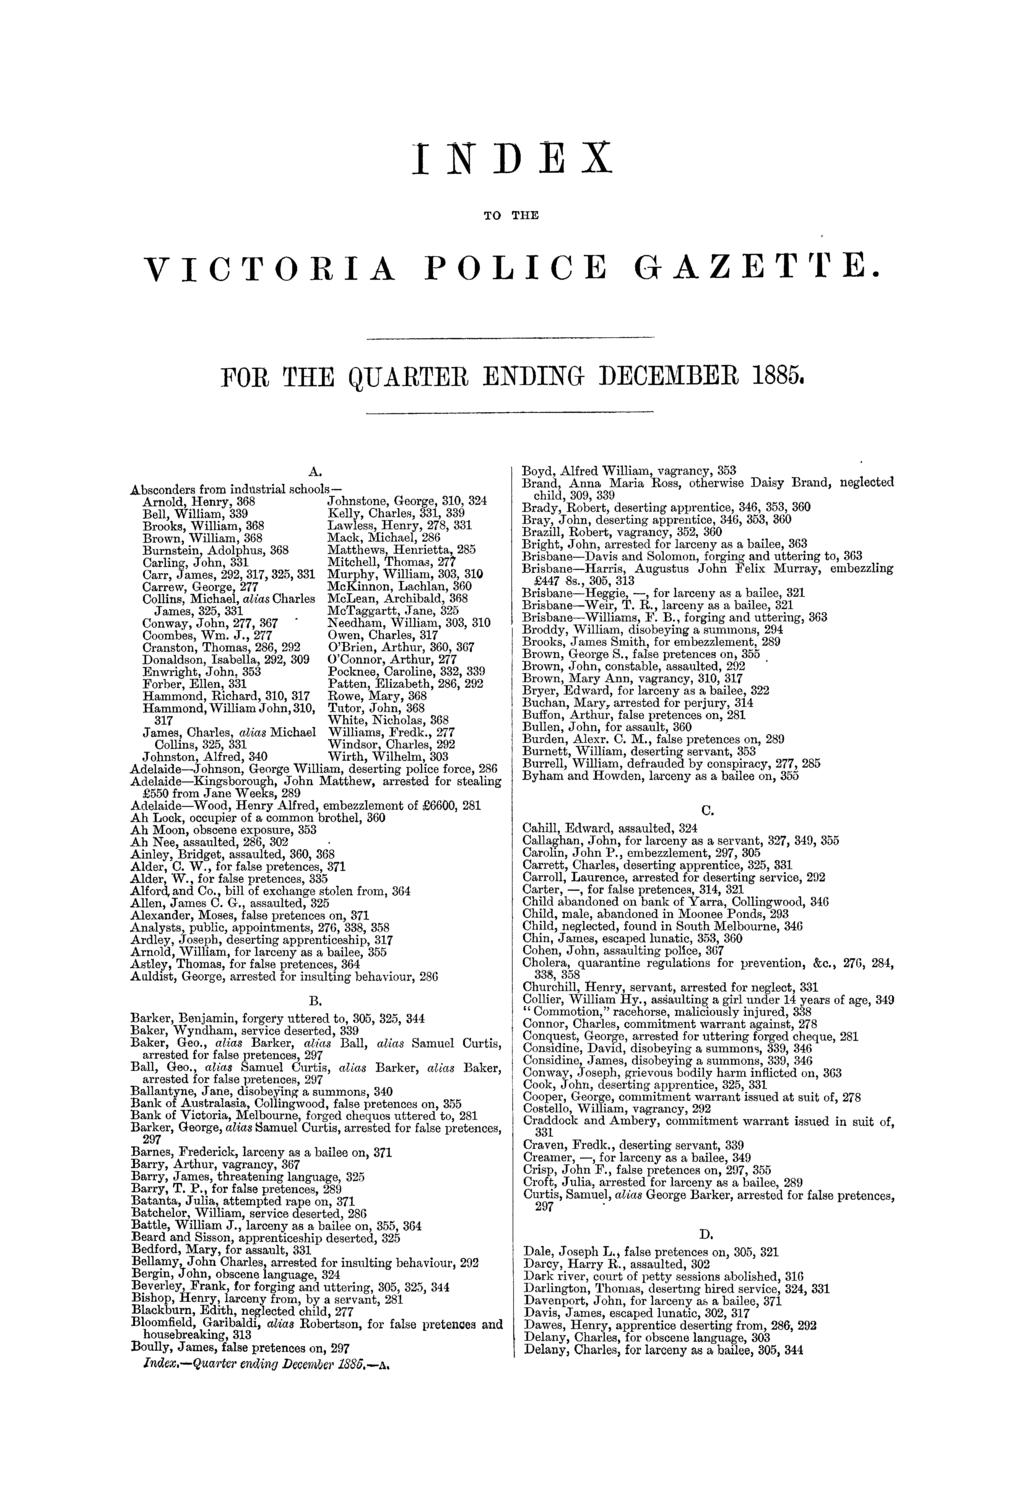 I NDEX TO THE VICTORIA POLICE GAZETTE. FOR THE QUARTER ENDING DECEMBER 18854 A.